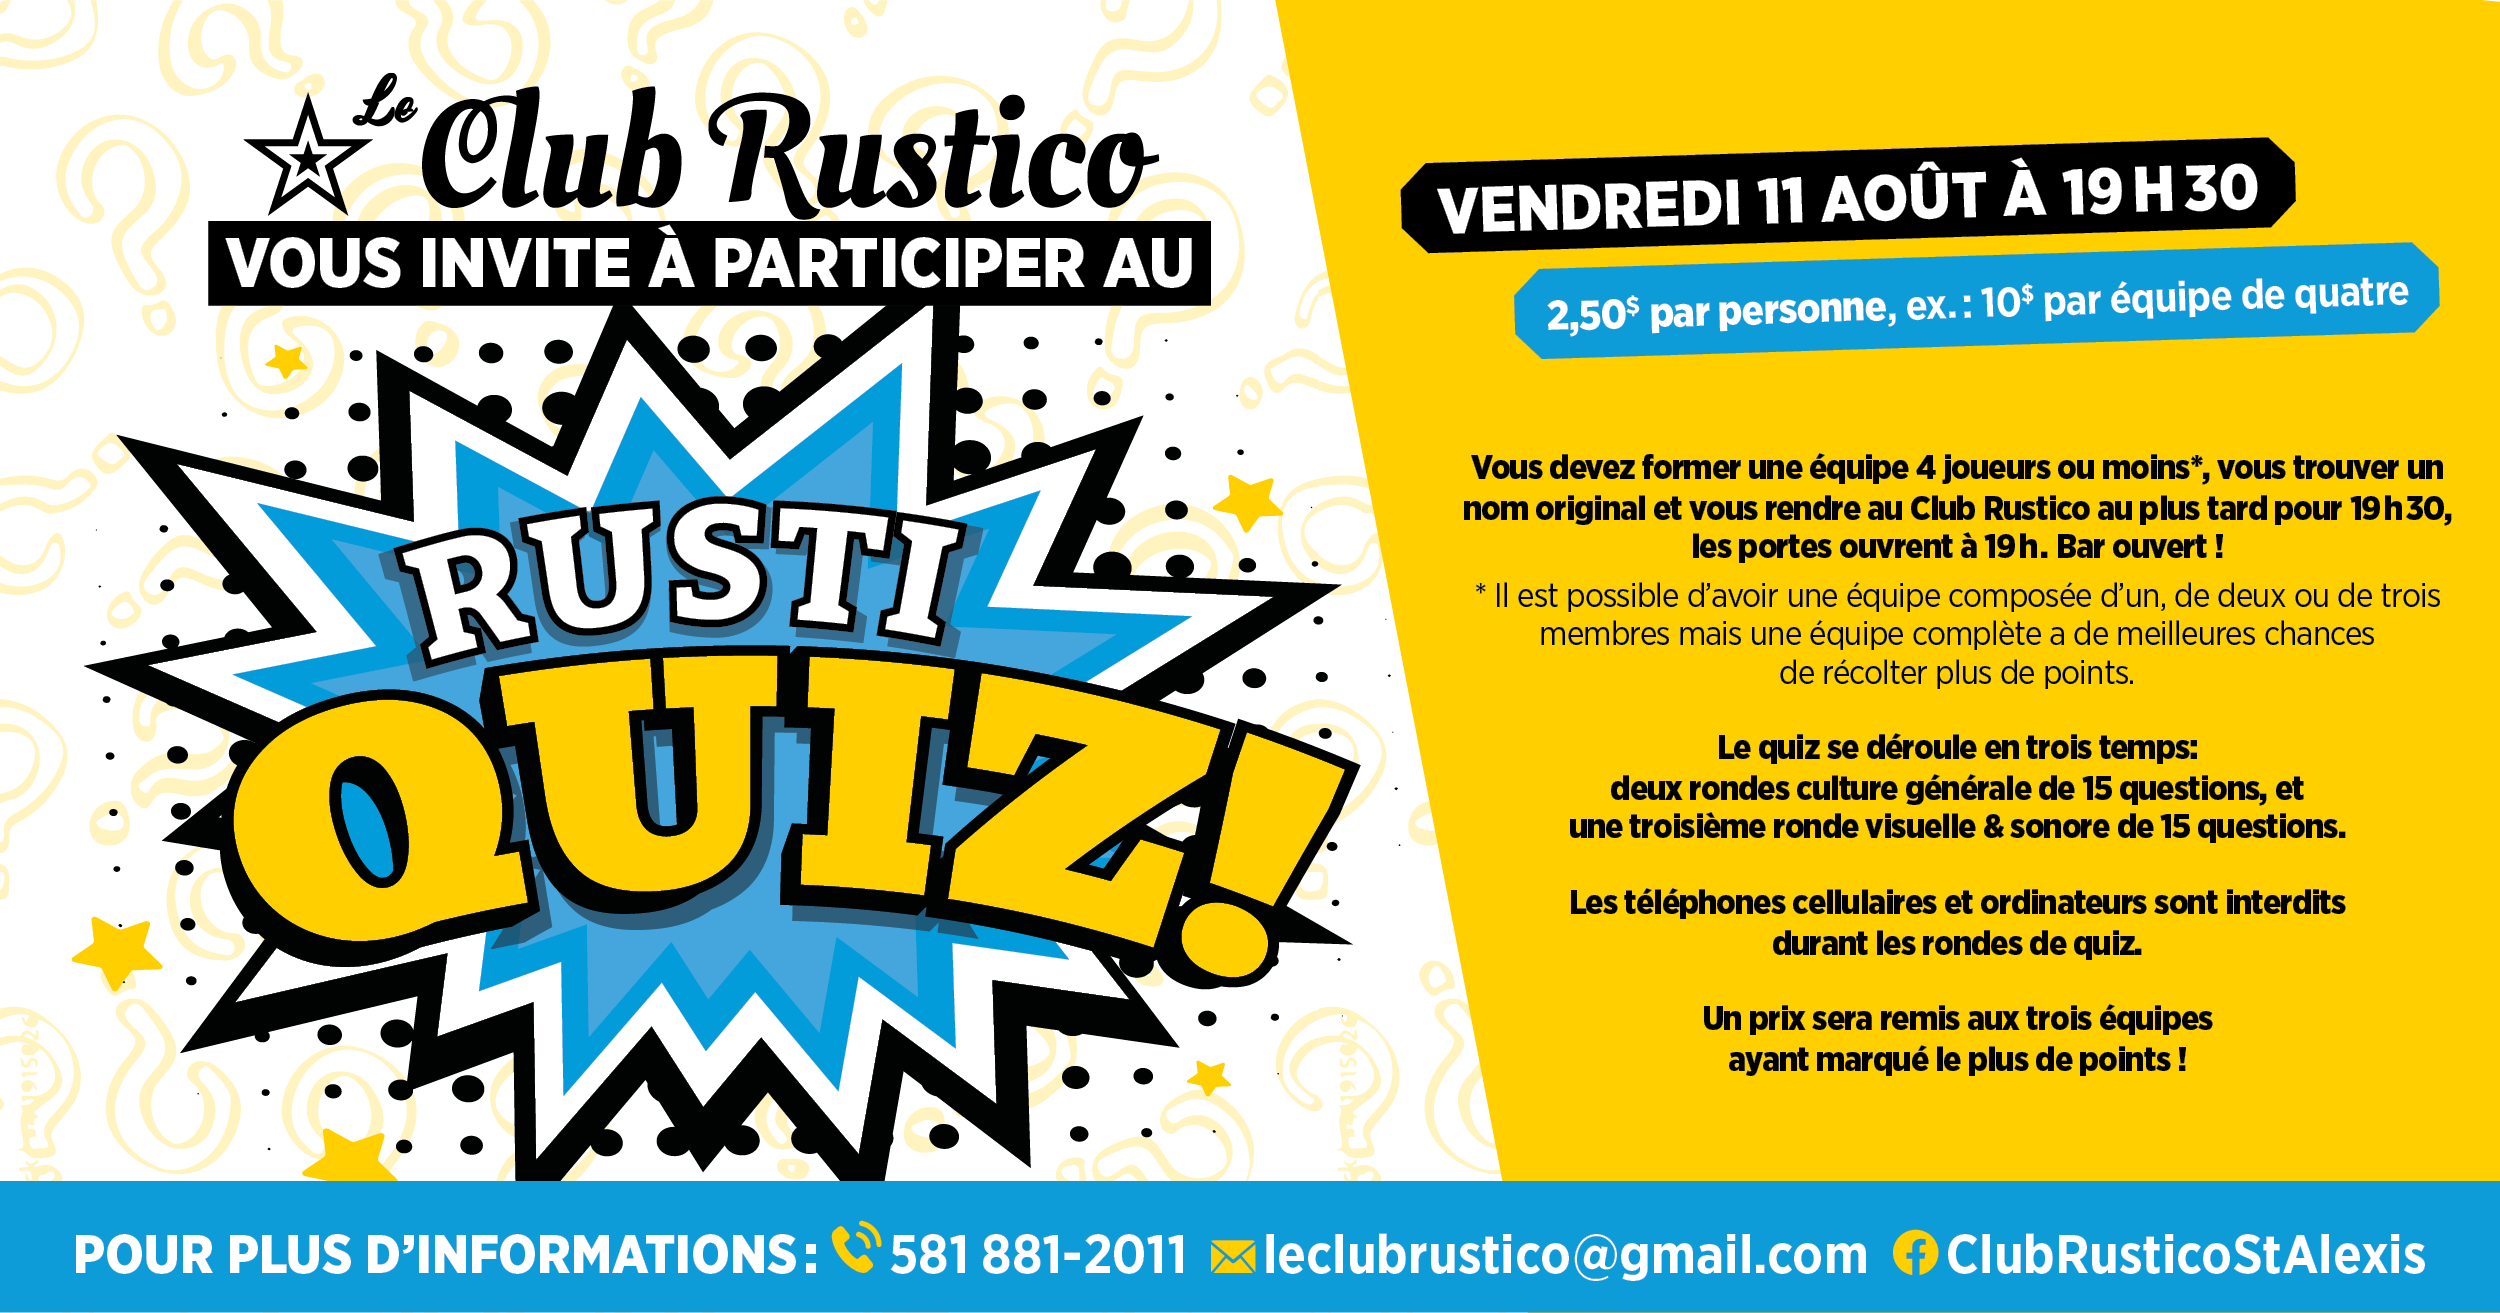 Le Club Rustico vous invite à participer au RustiQuiz